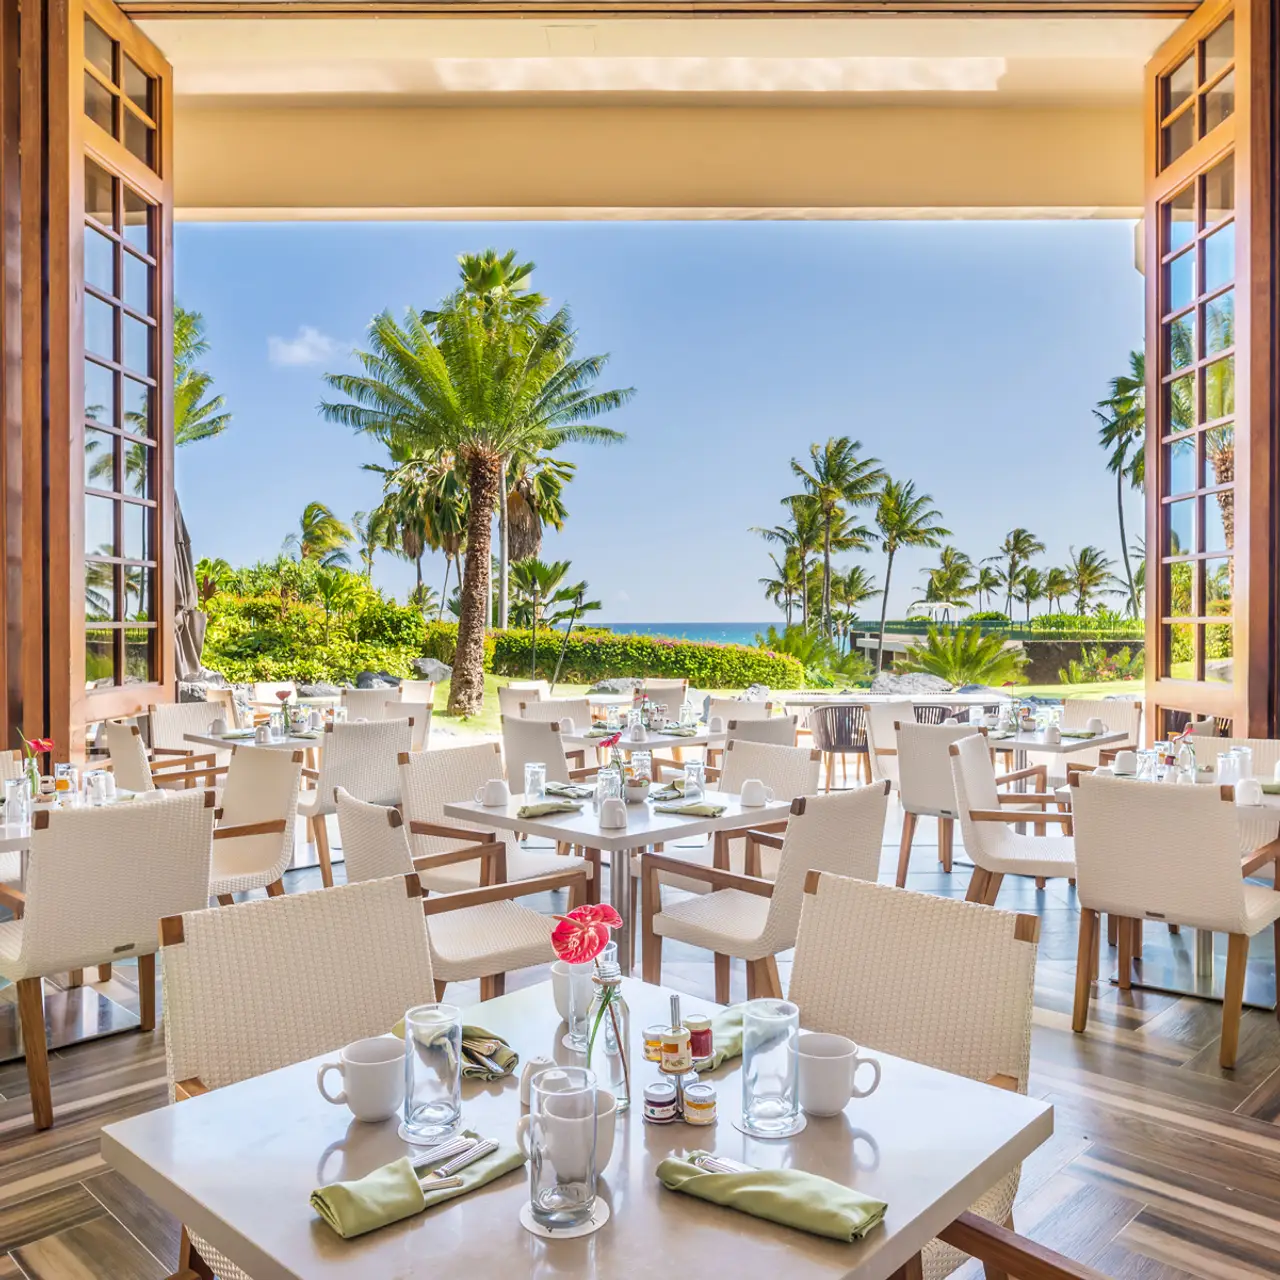 Ilima Terrace is a Restaurant located in the city of Koloa on Kauai, Hawaii